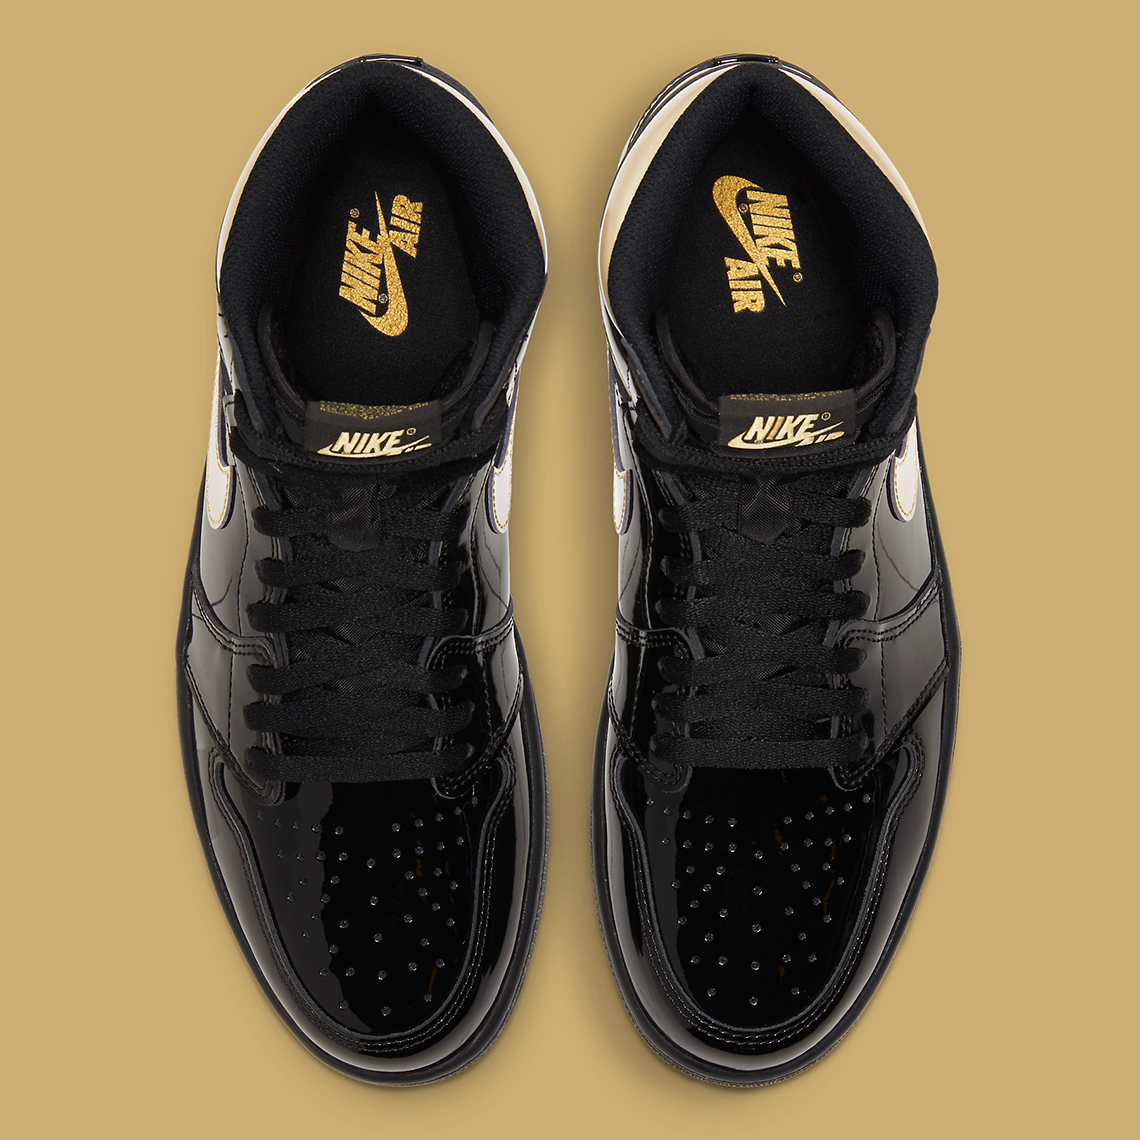 Jordan 1 Black Gold 555088 032 Release Date 4